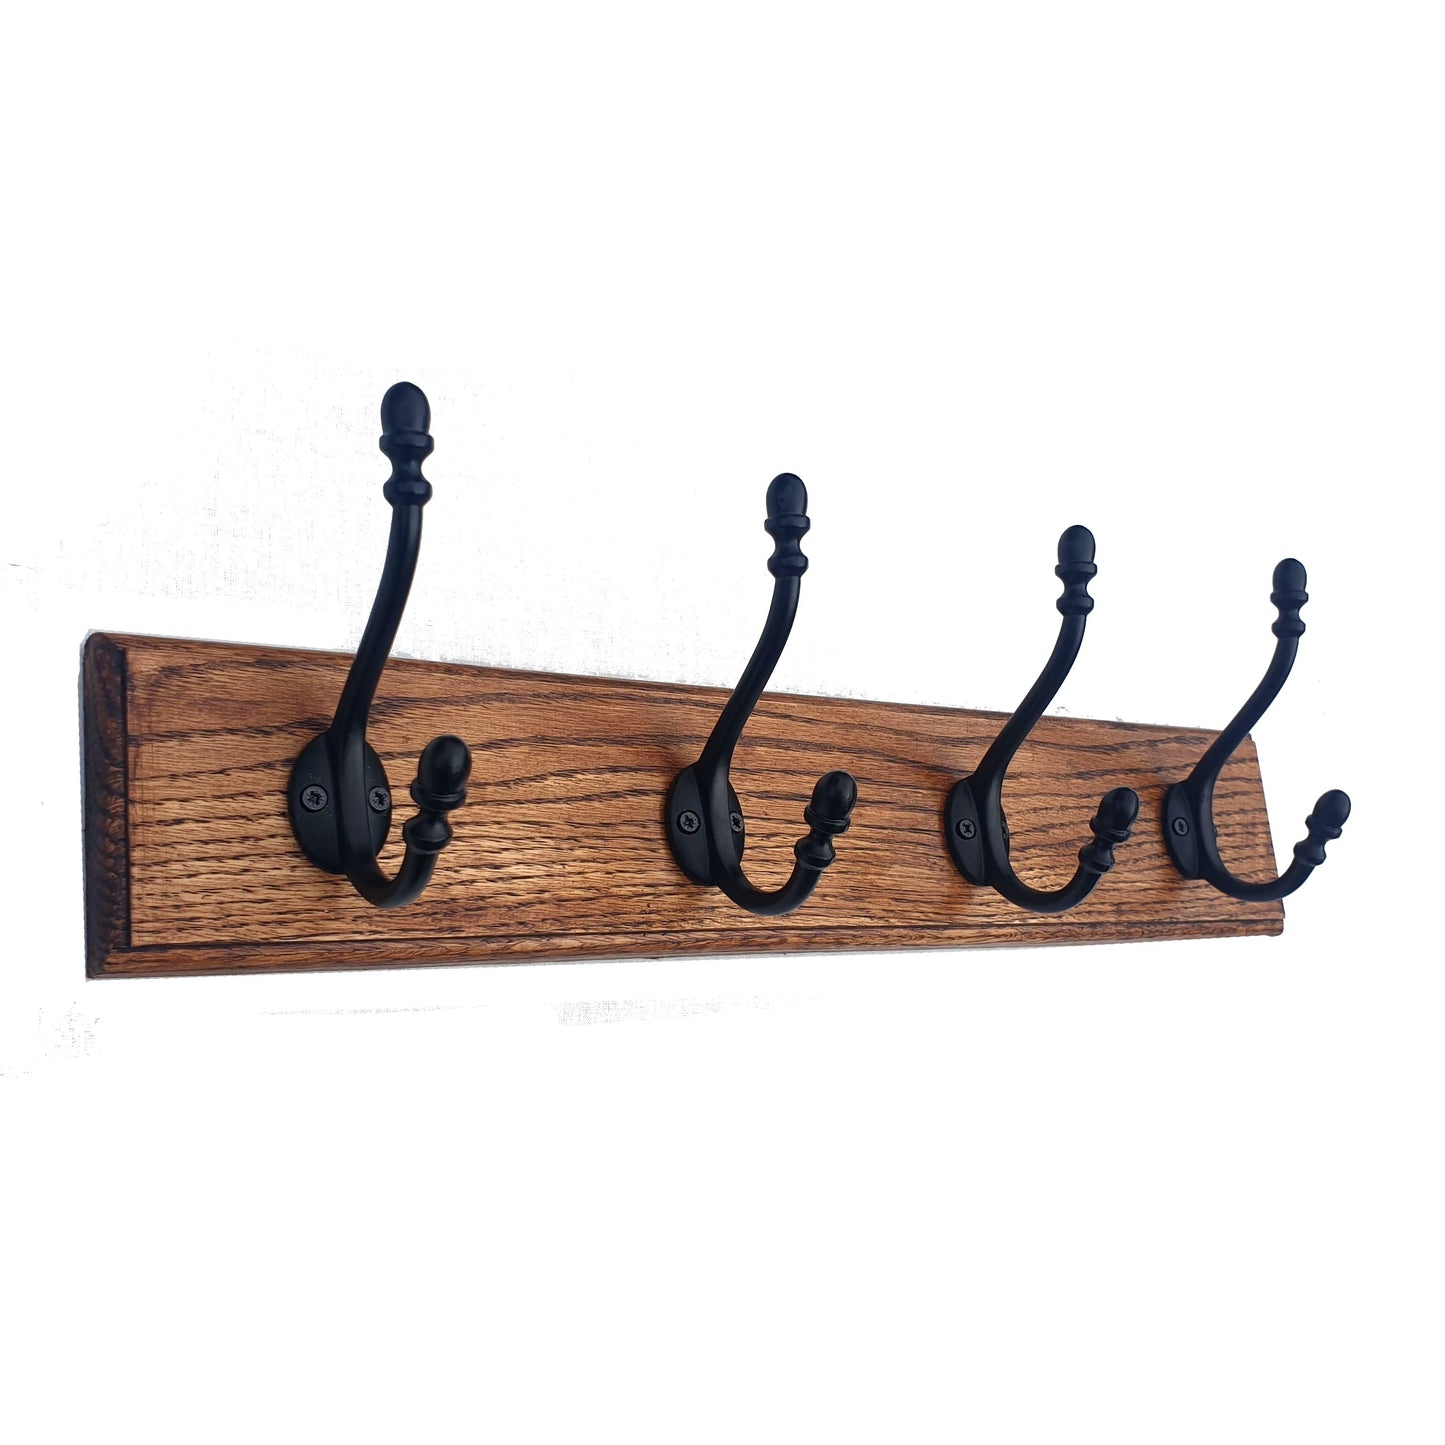 Solid Oak Wooden Coat Rack in multiple sizes - Teak finish  Hooks Knobs 